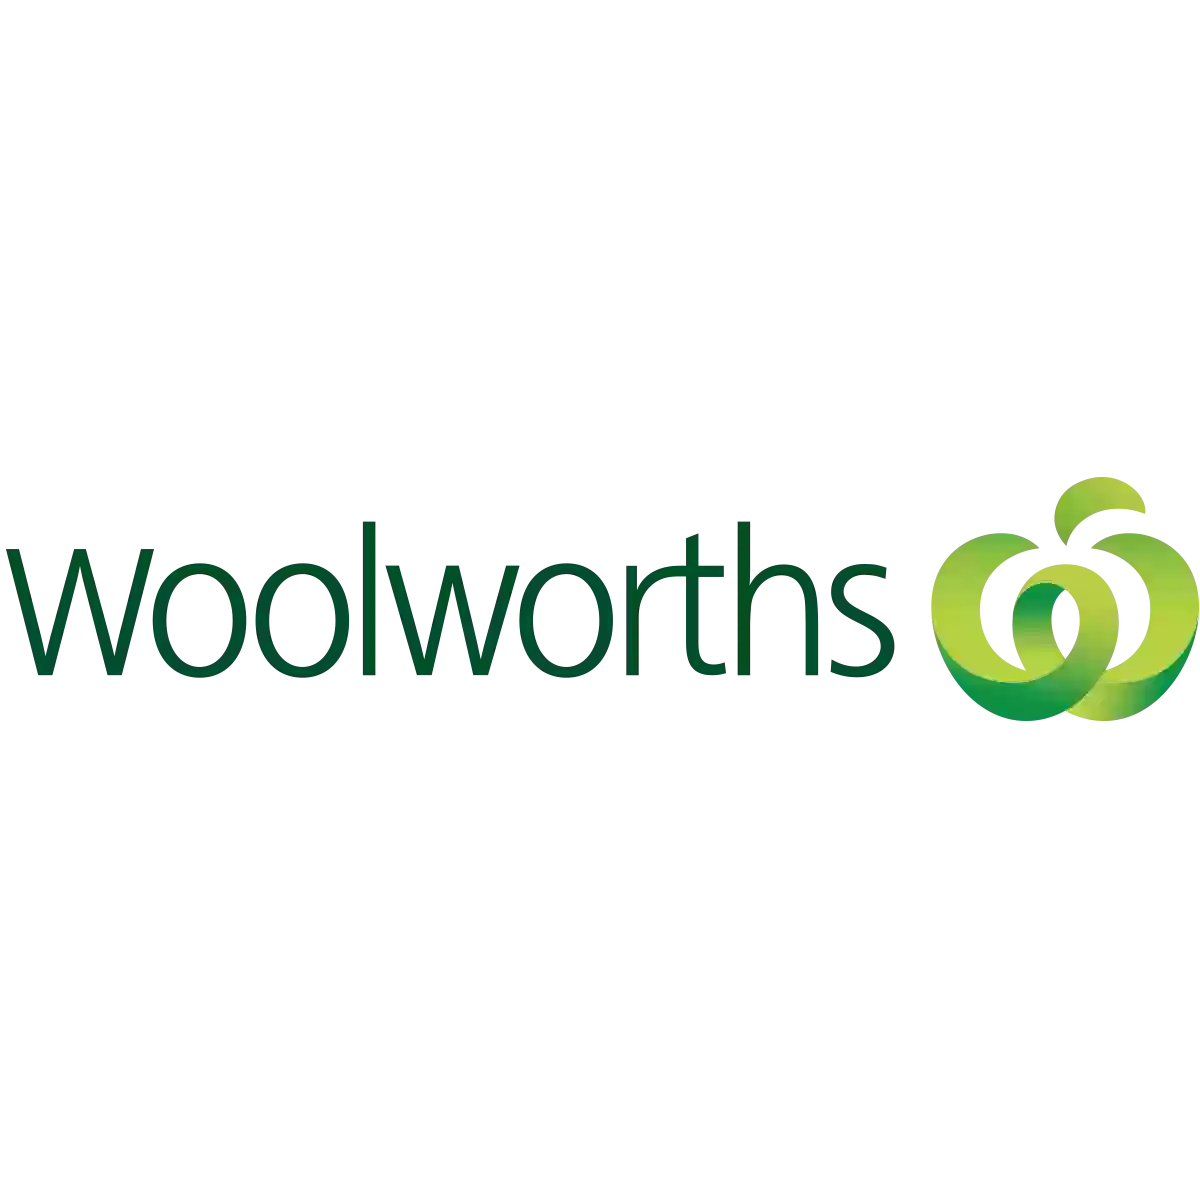 Woolworths Mt Druitt